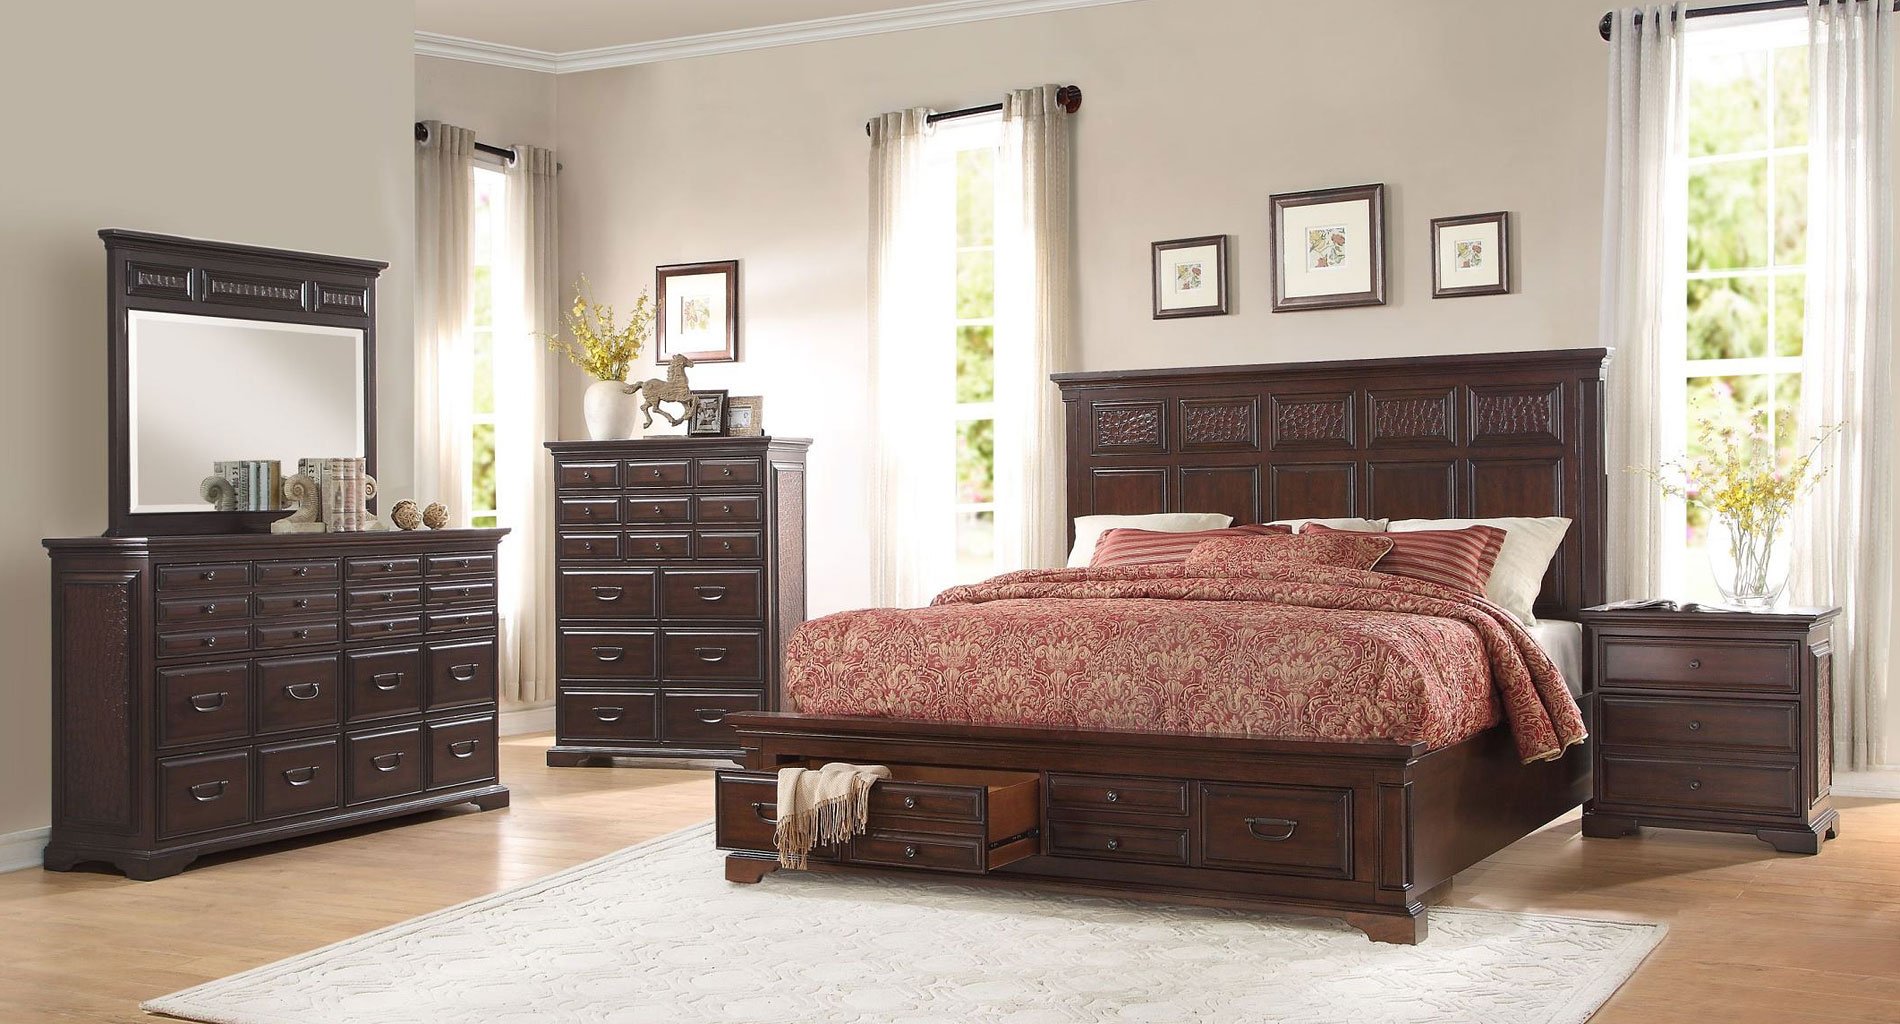 courts bedroom furniture guyana